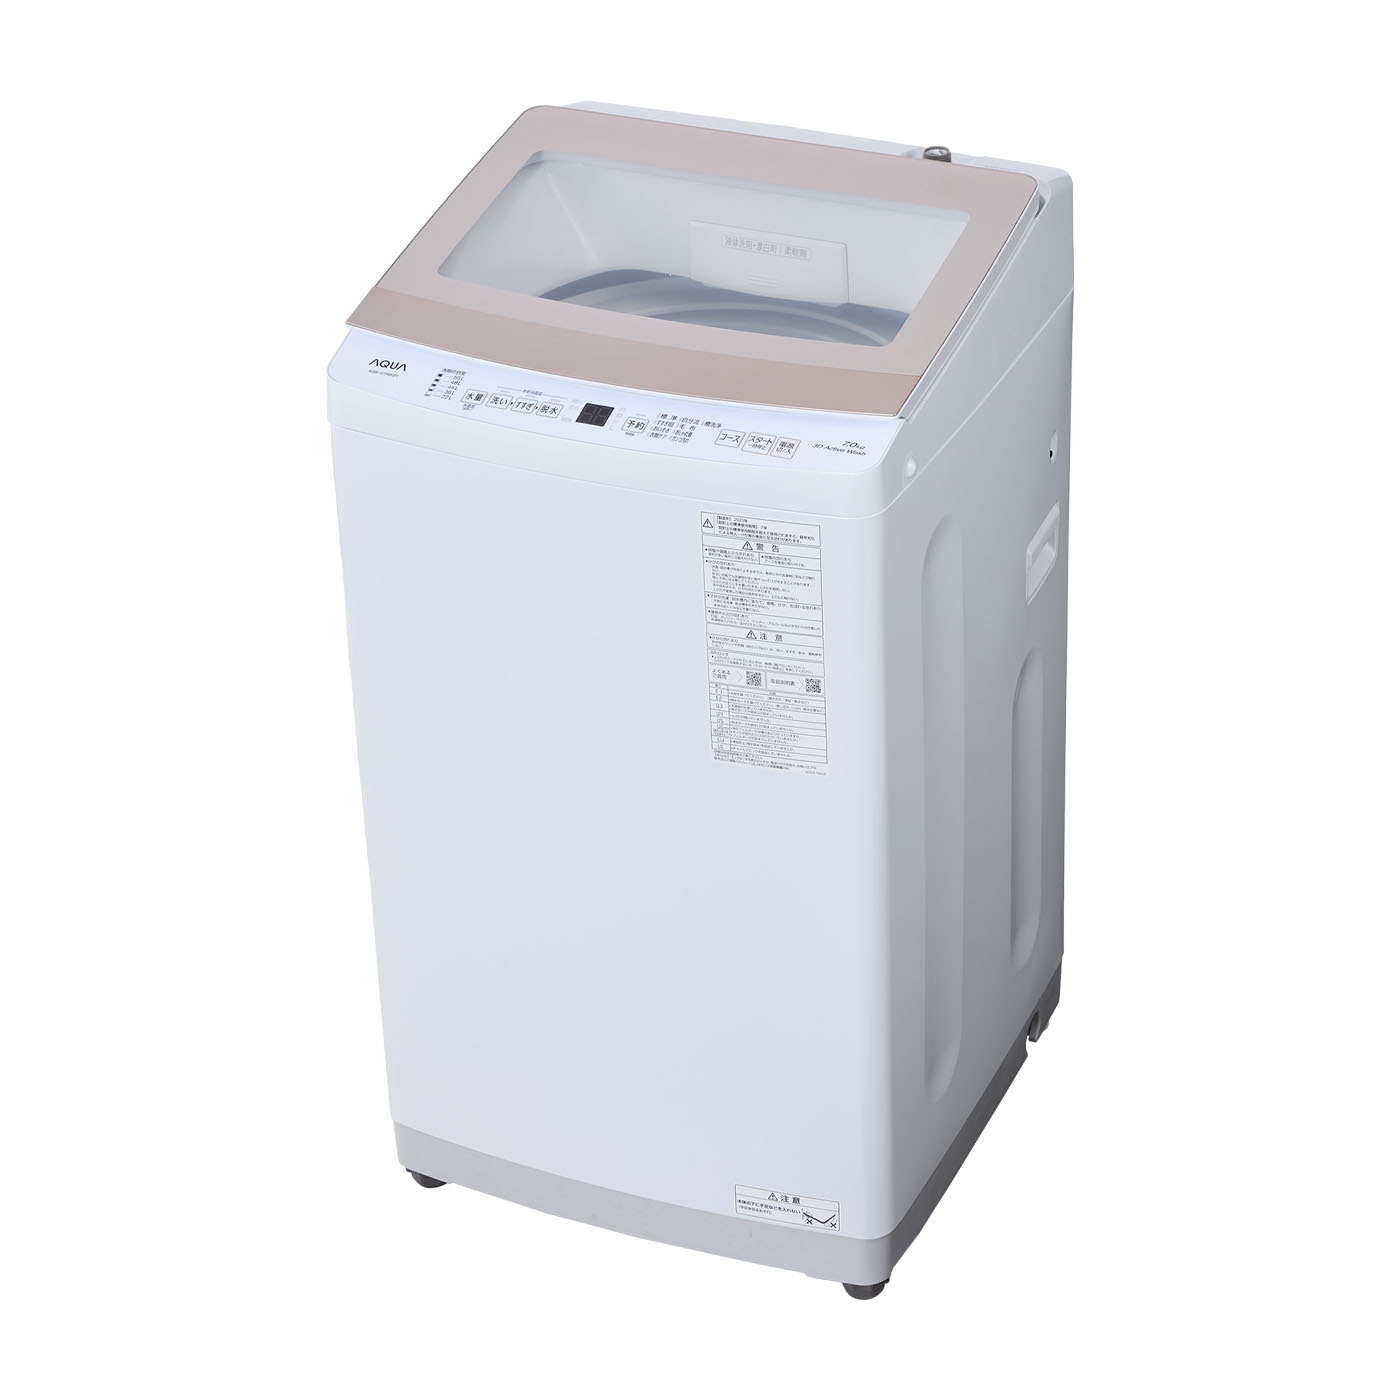 COMFEE' 全自動洗濯機 6kg 一人暮らし 部屋干し 風乾燥 コンパクト 除